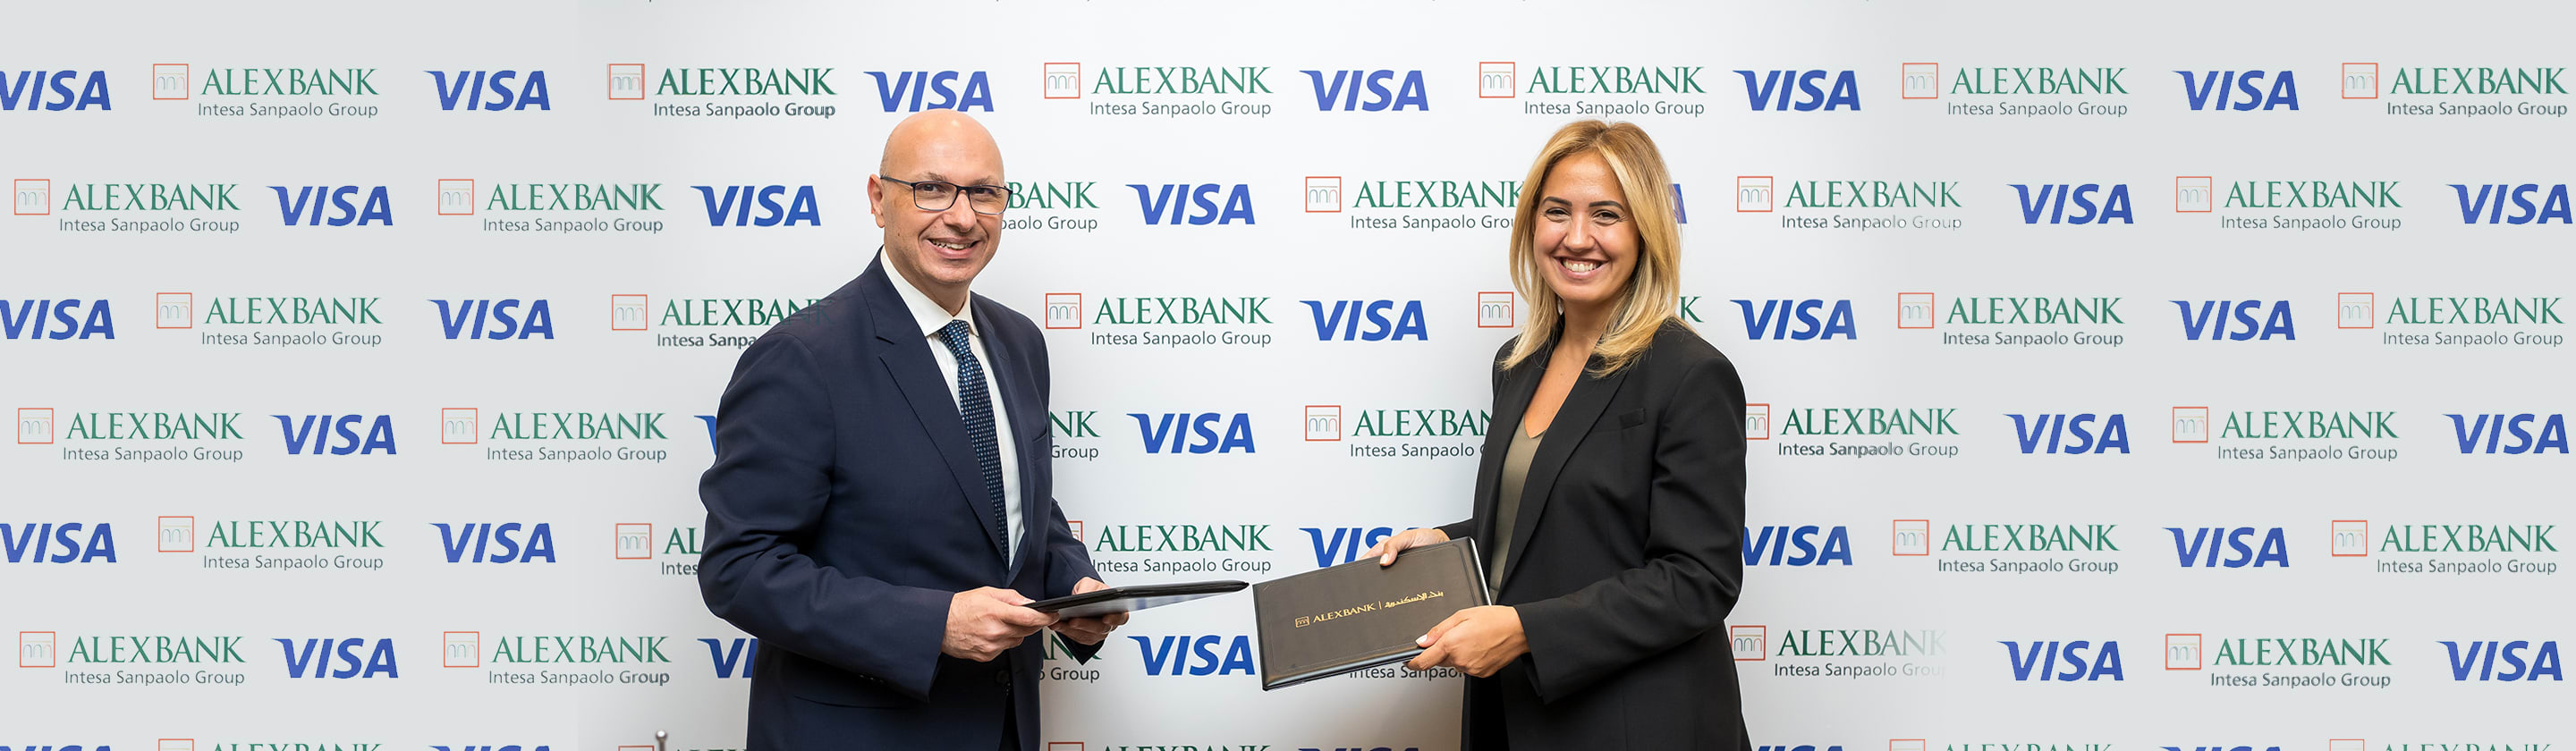 alexbank-x-visa-prl